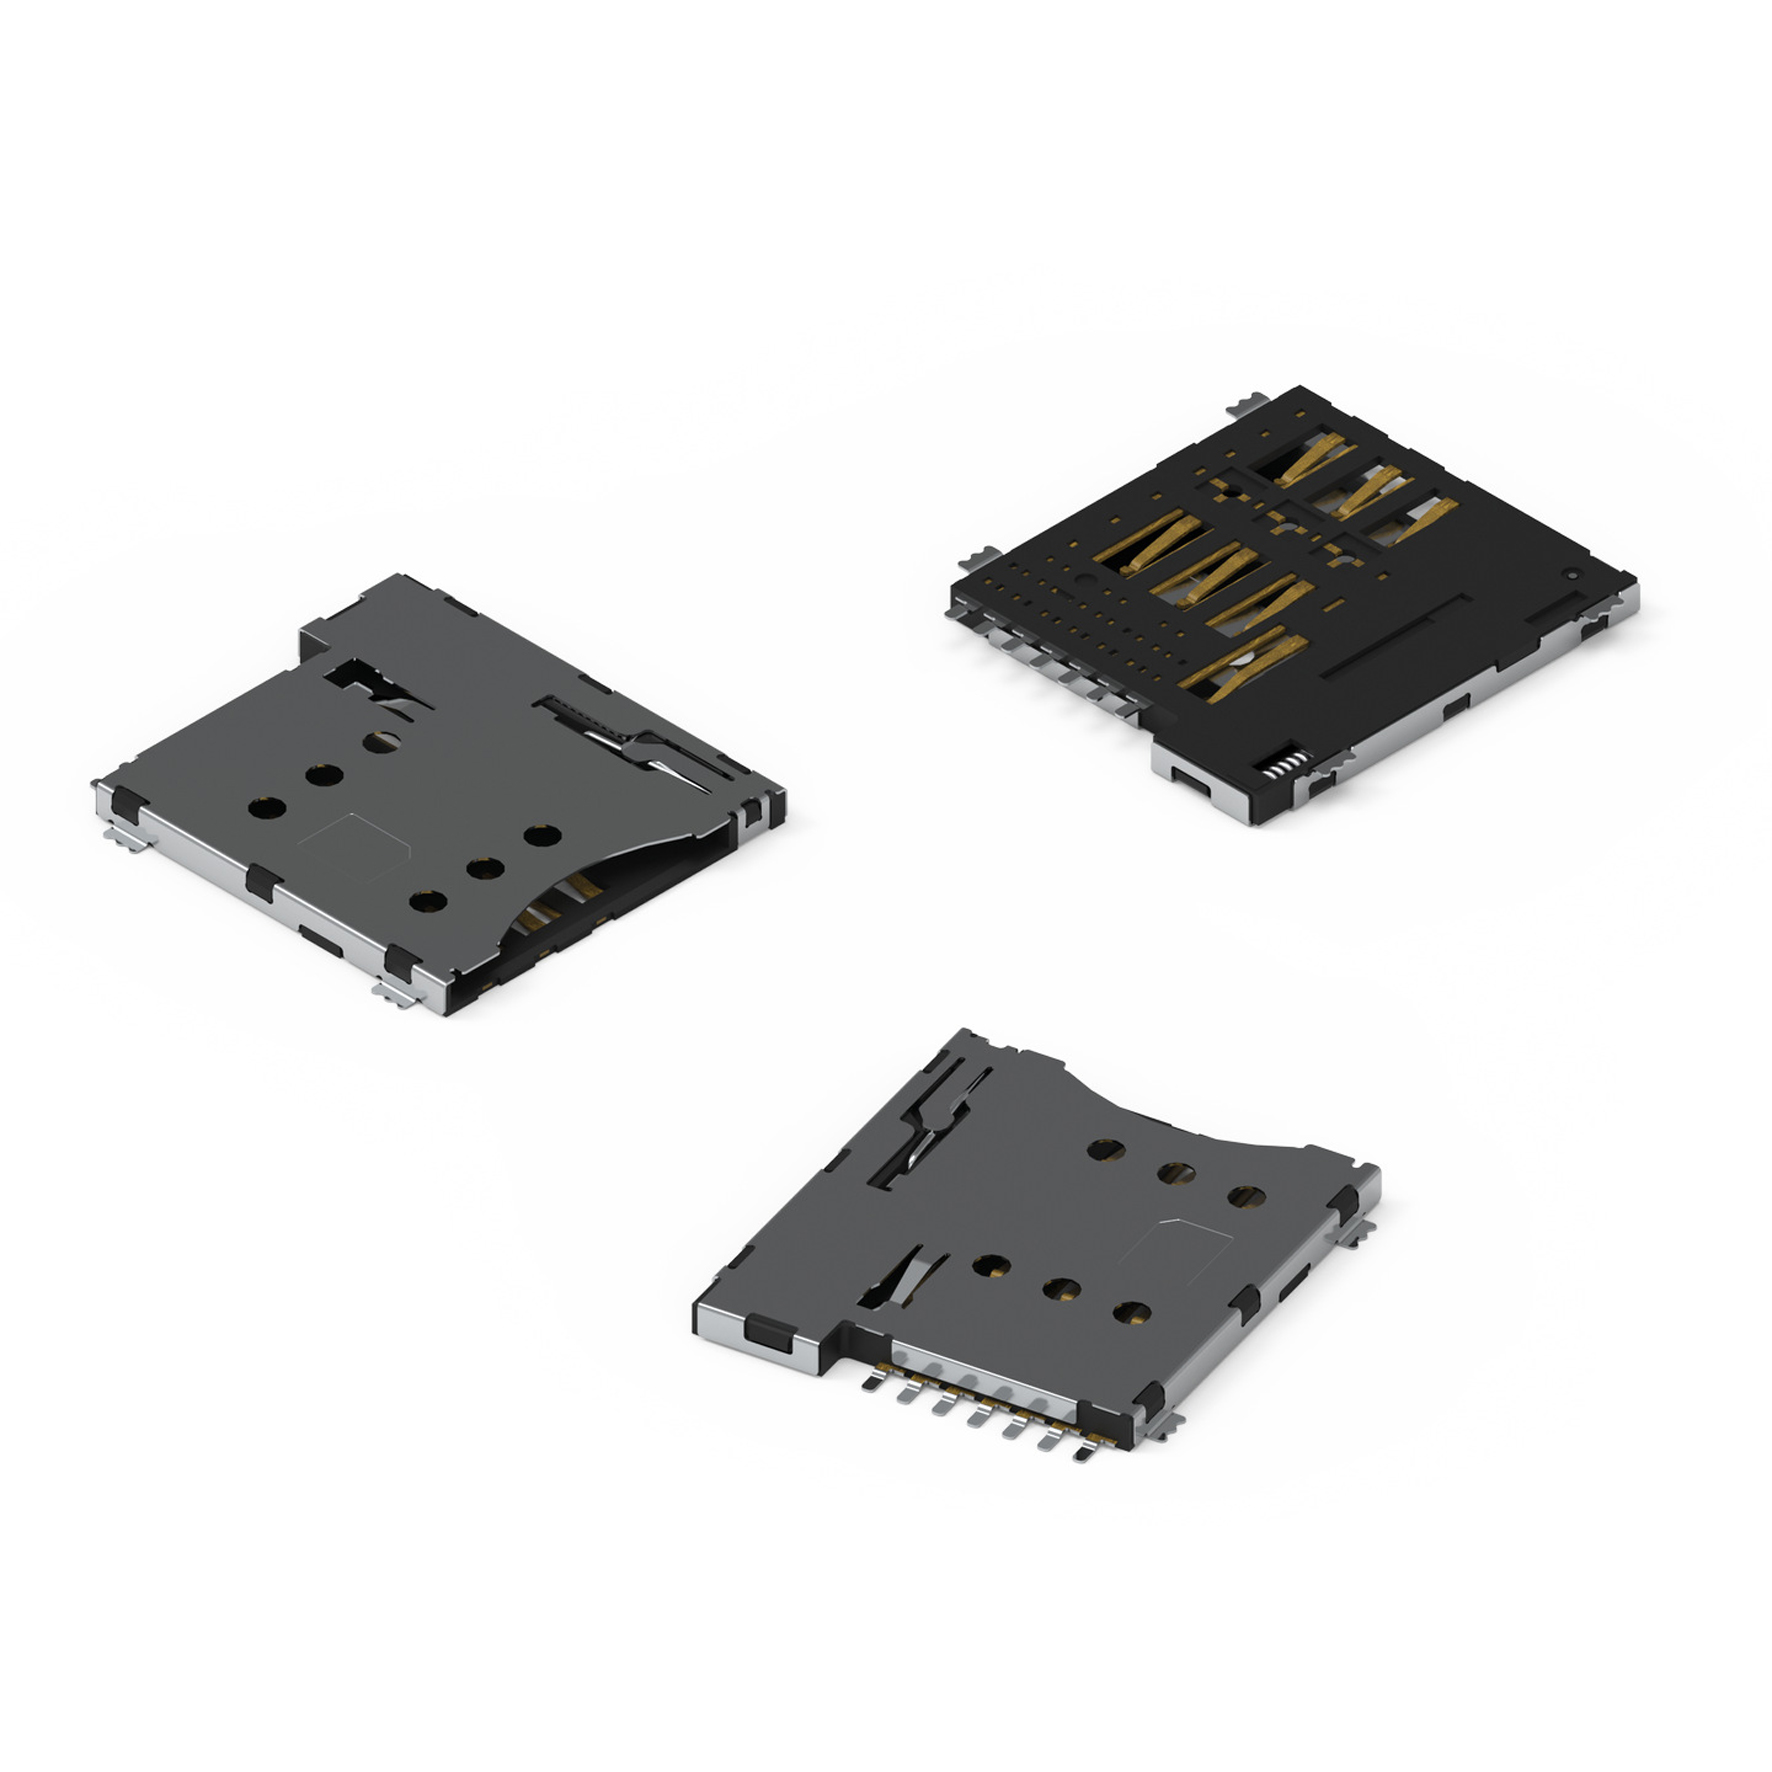 Würth Elektronik introduces micro SIM card interface with card detection